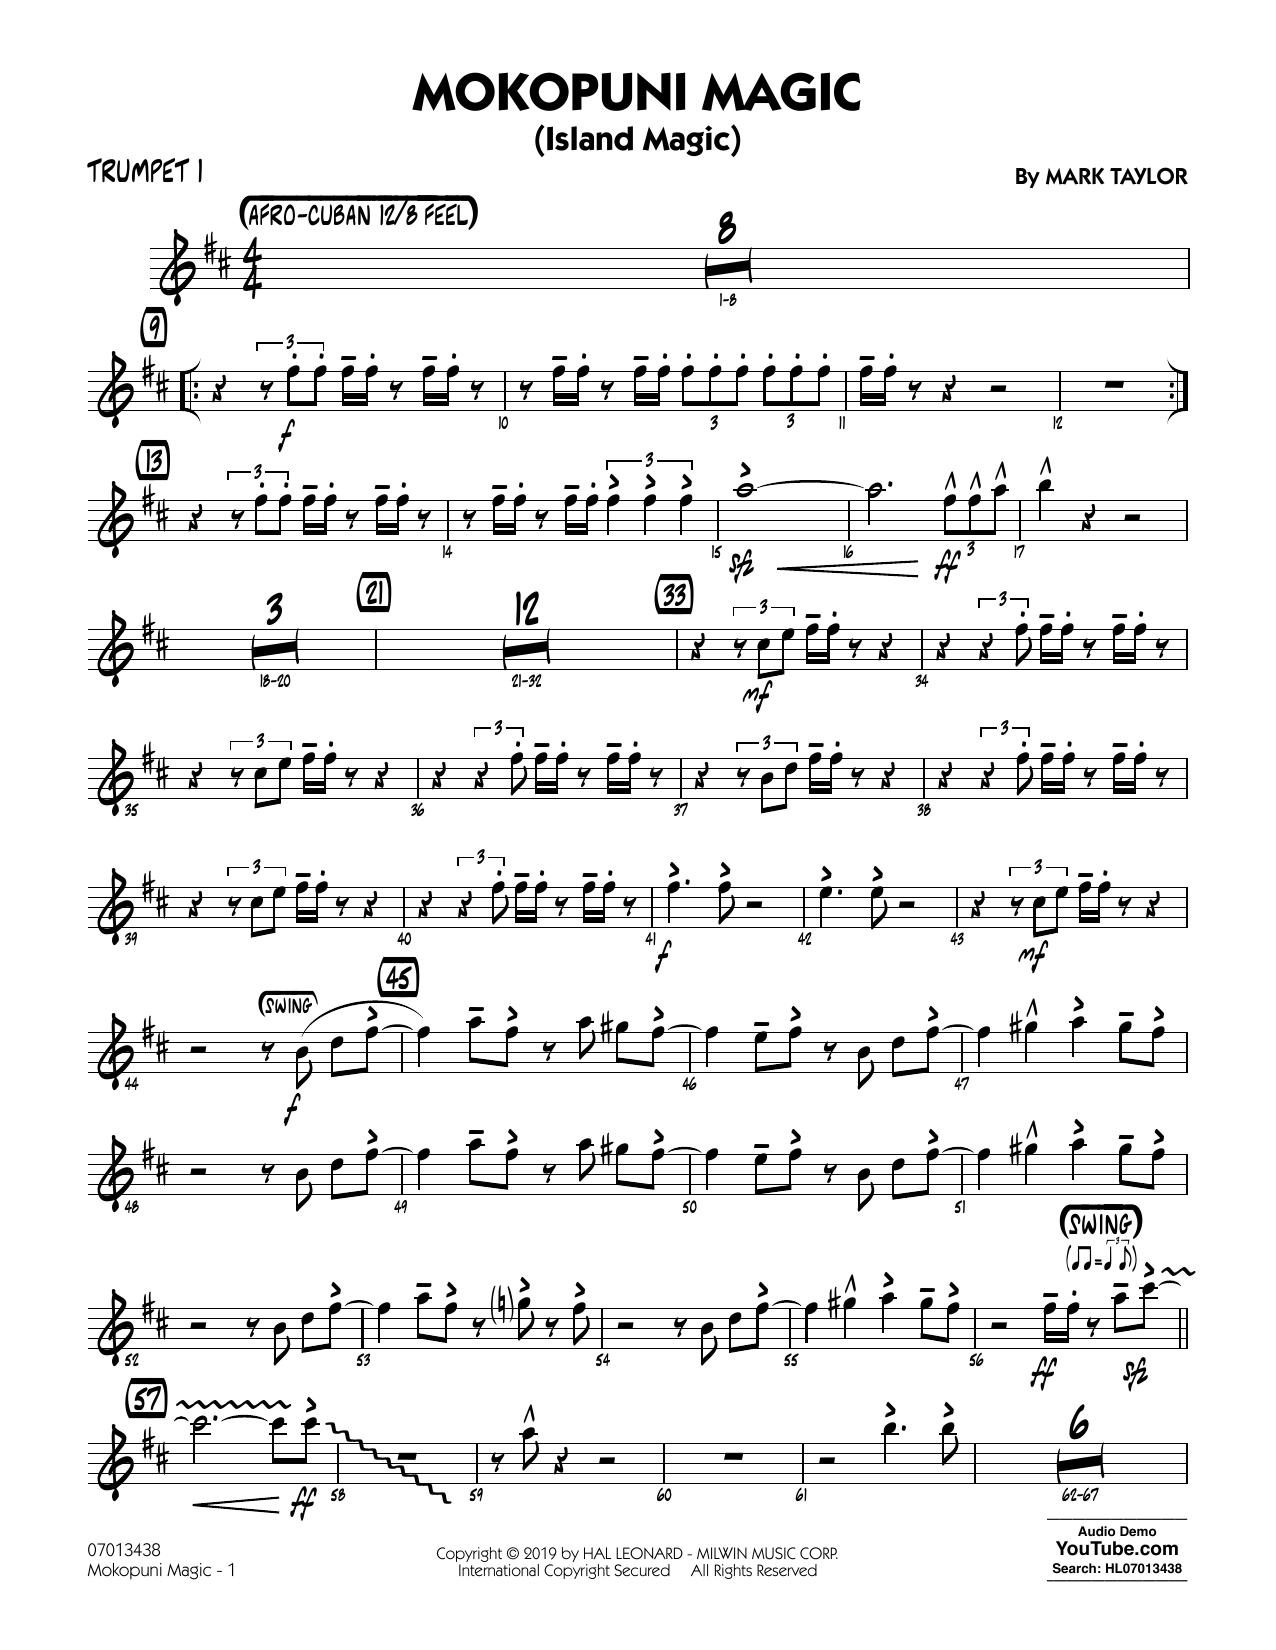 Download Mark Taylor Mokopuni Magic (Island Magic) - Trumpet 1 Sheet Music and learn how to play Jazz Ensemble PDF digital score in minutes